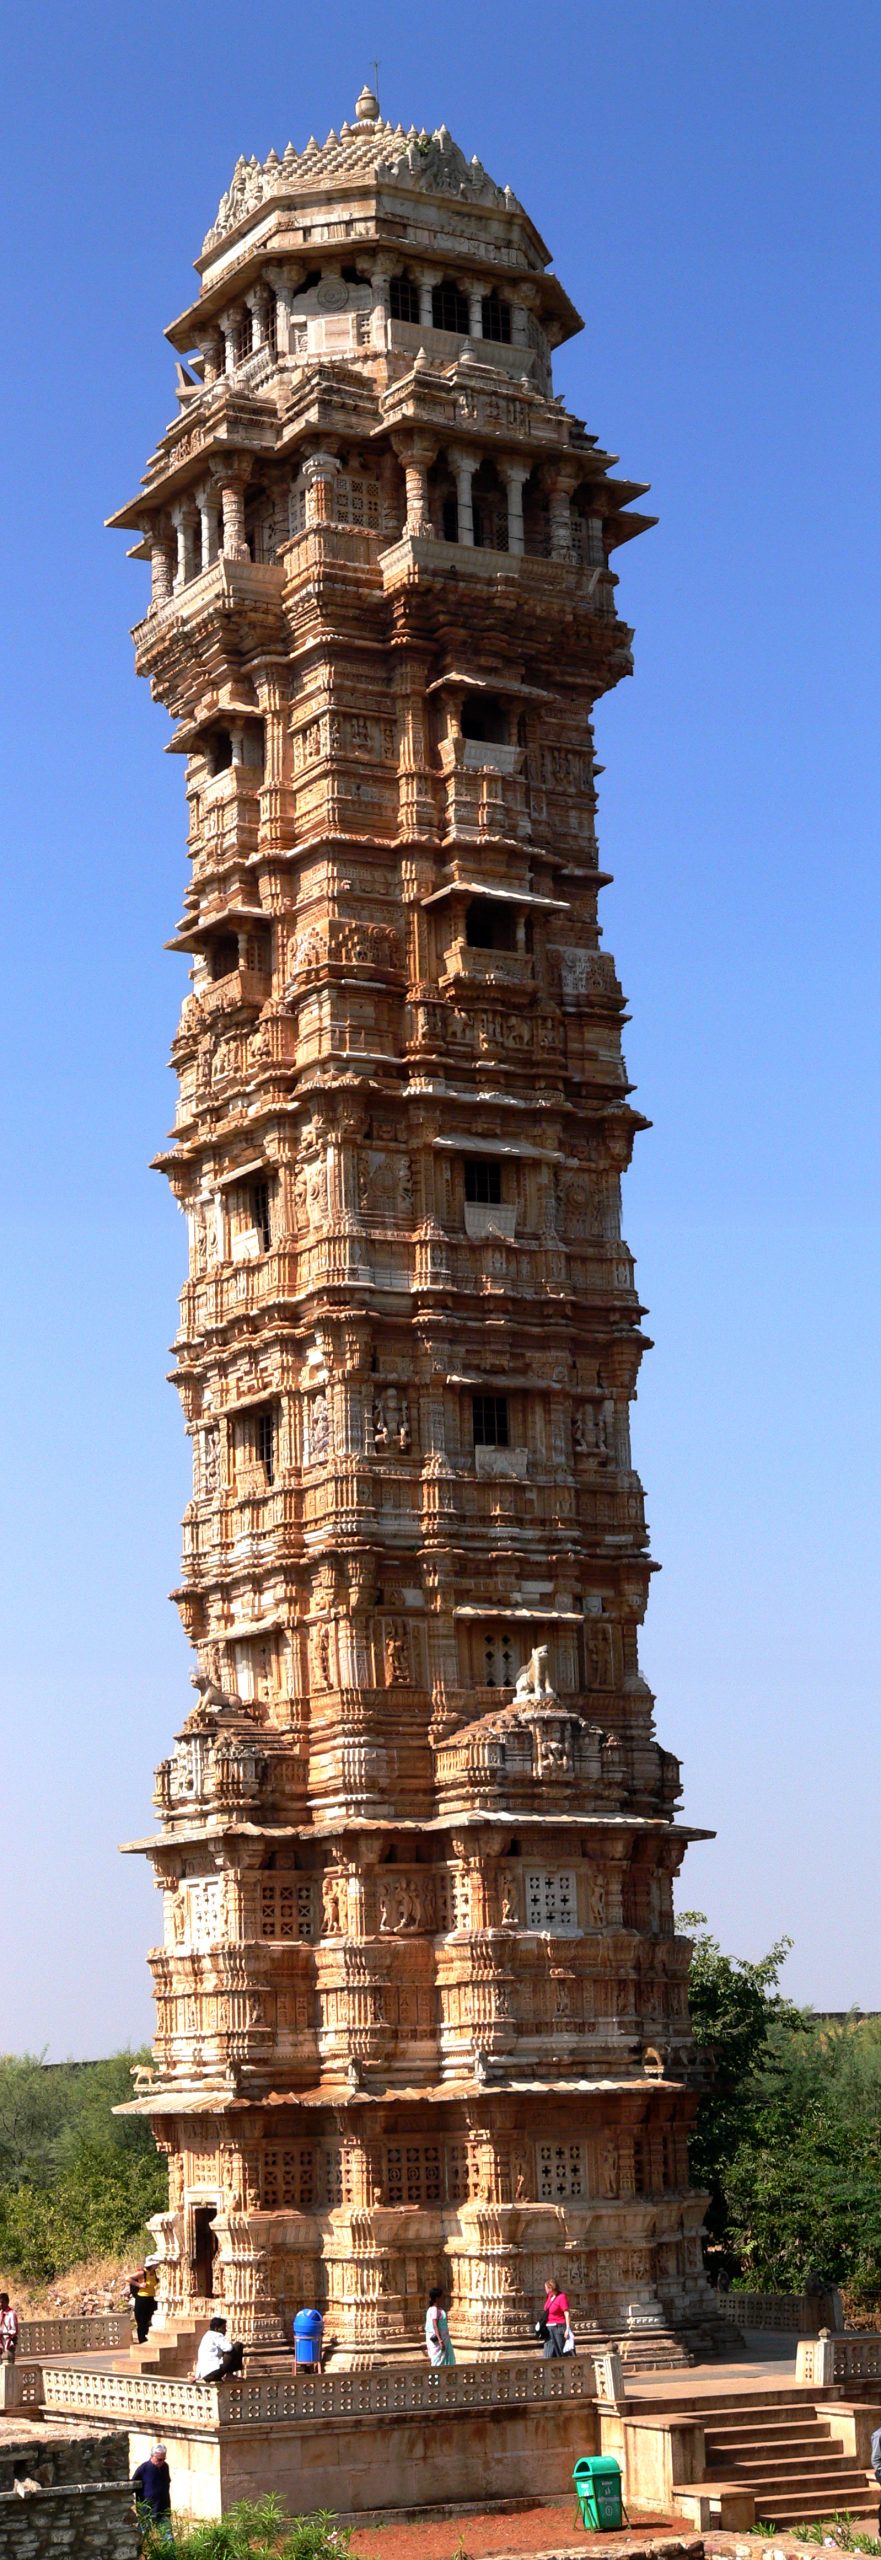 Vijay Stambh (Tower of Victory)